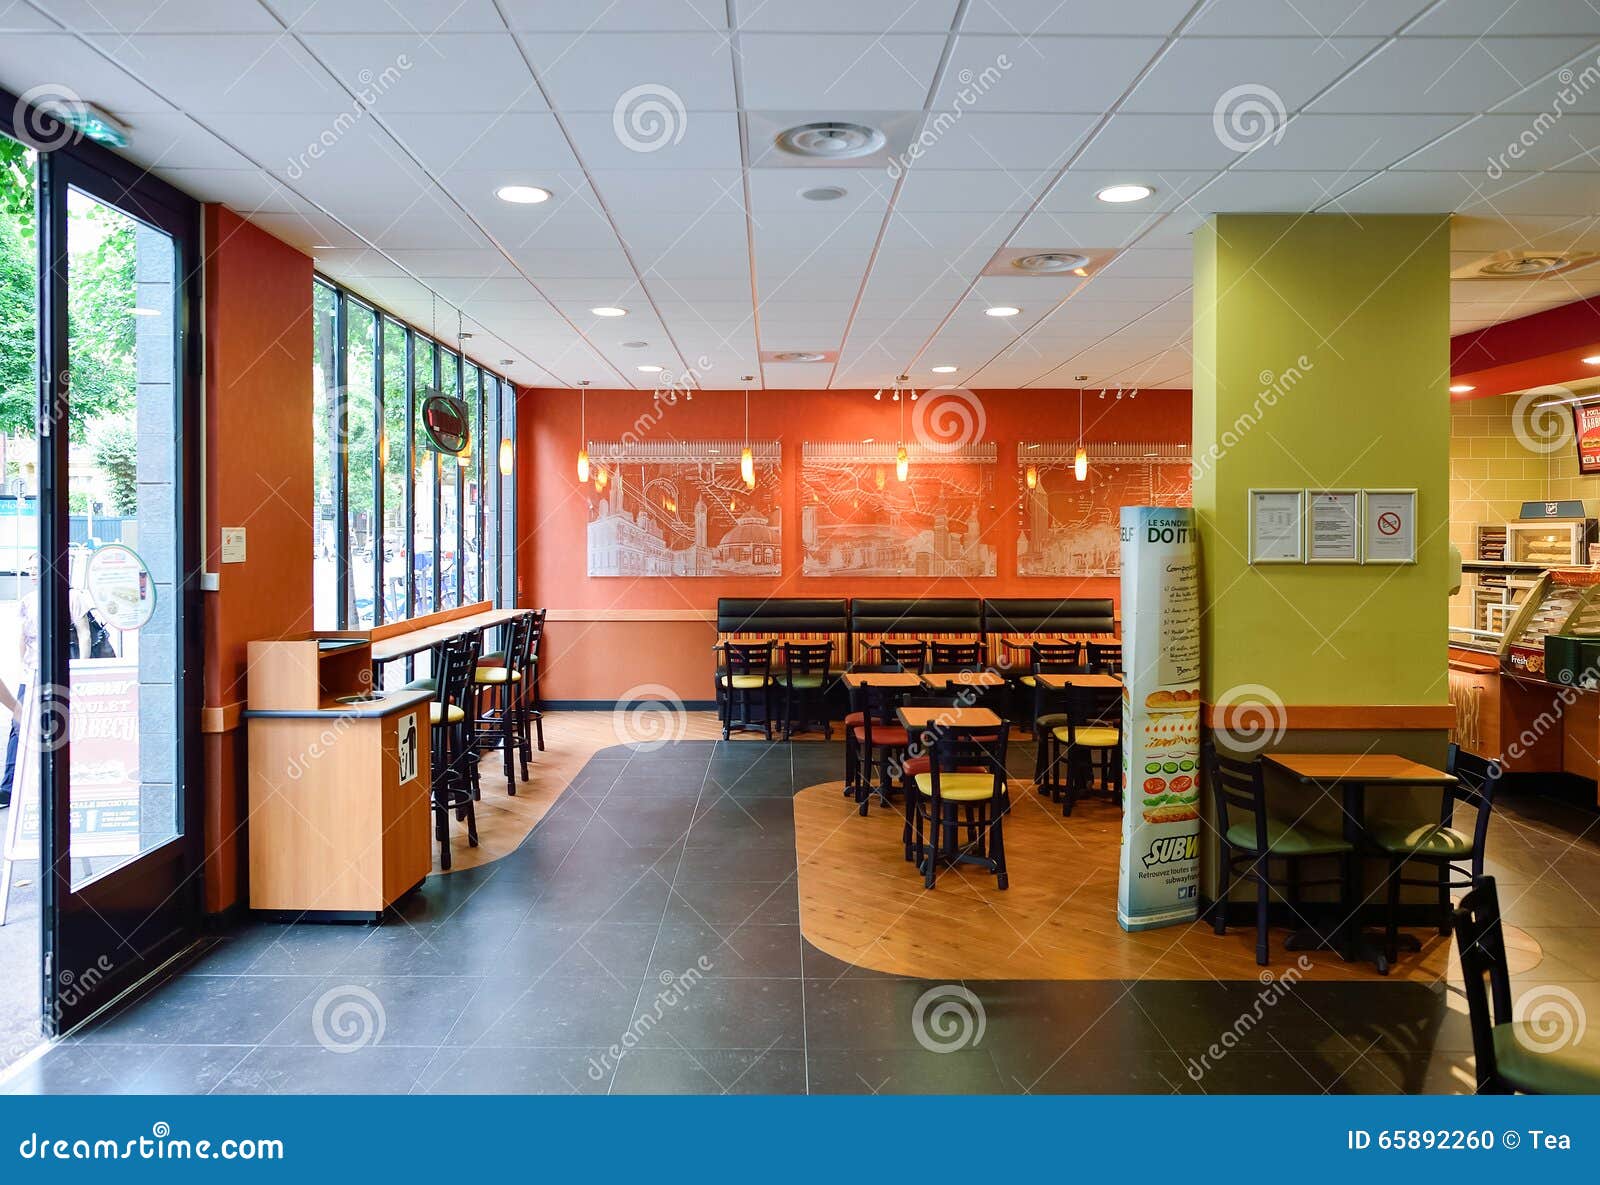 Subway Fast Food Restaurant Interior  Editorial Image 